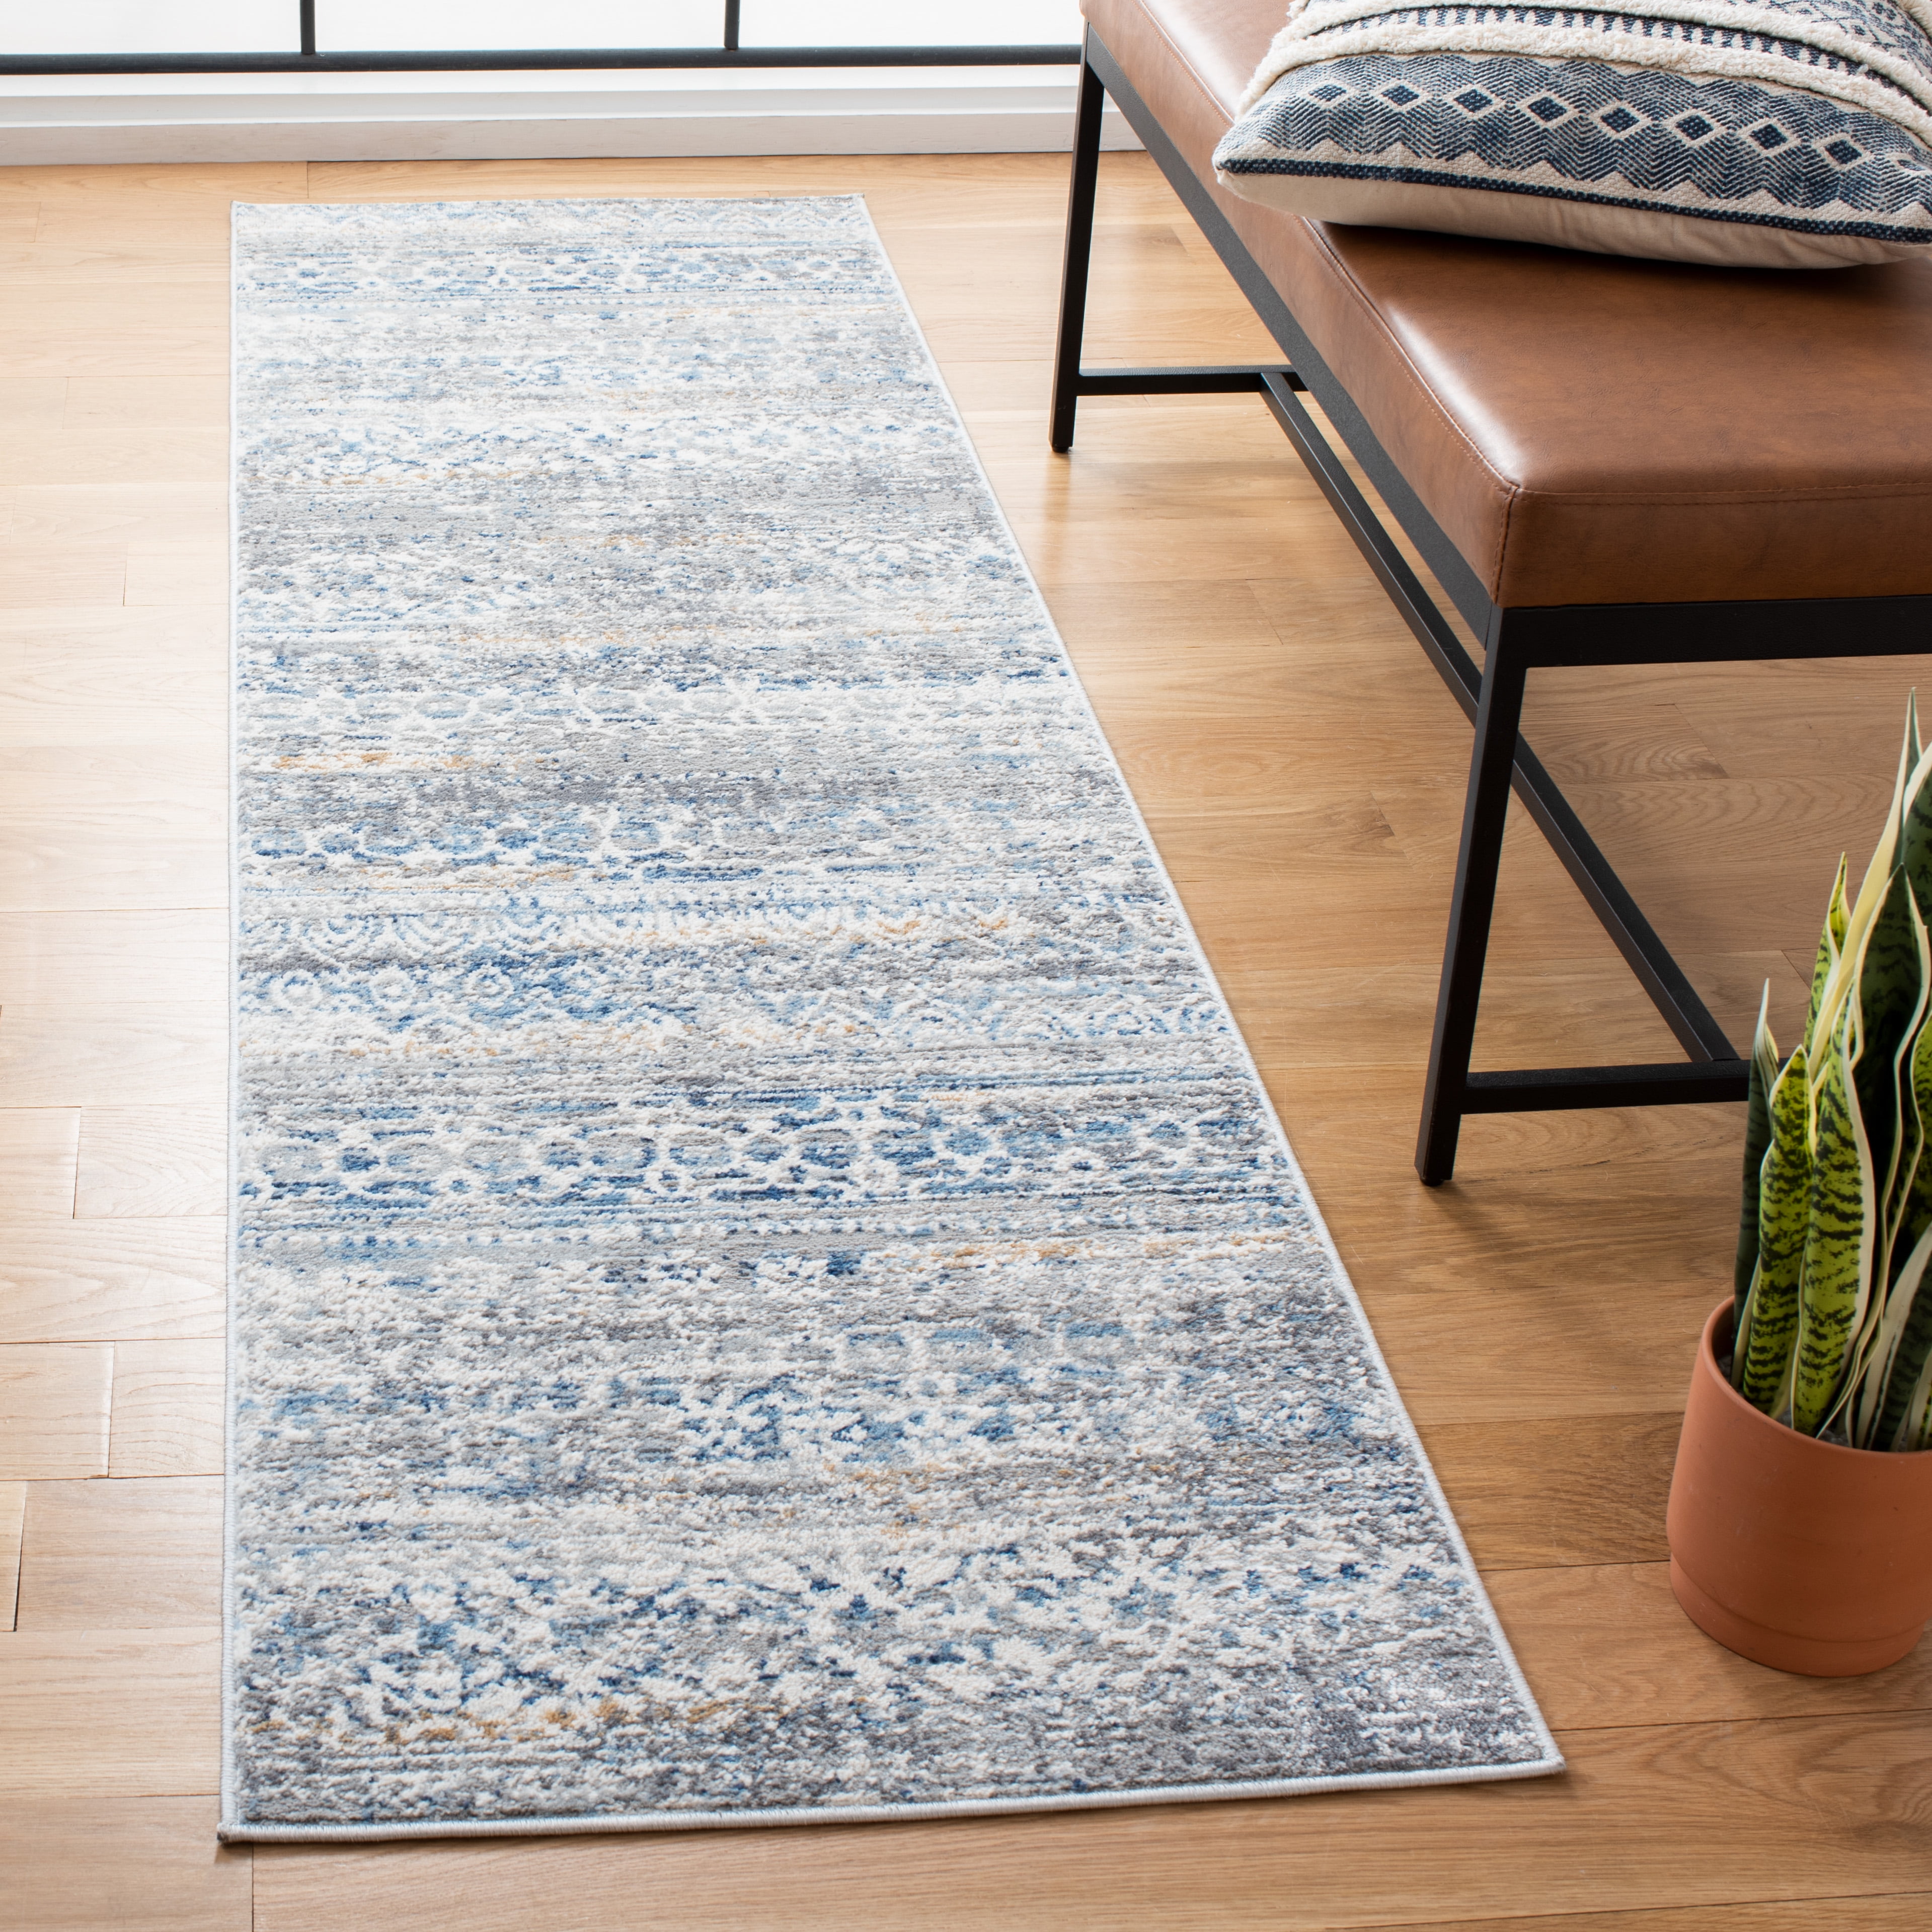 Details about   Area Floor Rugs Kitchen Runner Rug Mat Carpet Kitchen Decor 20"X59" Olive Green 